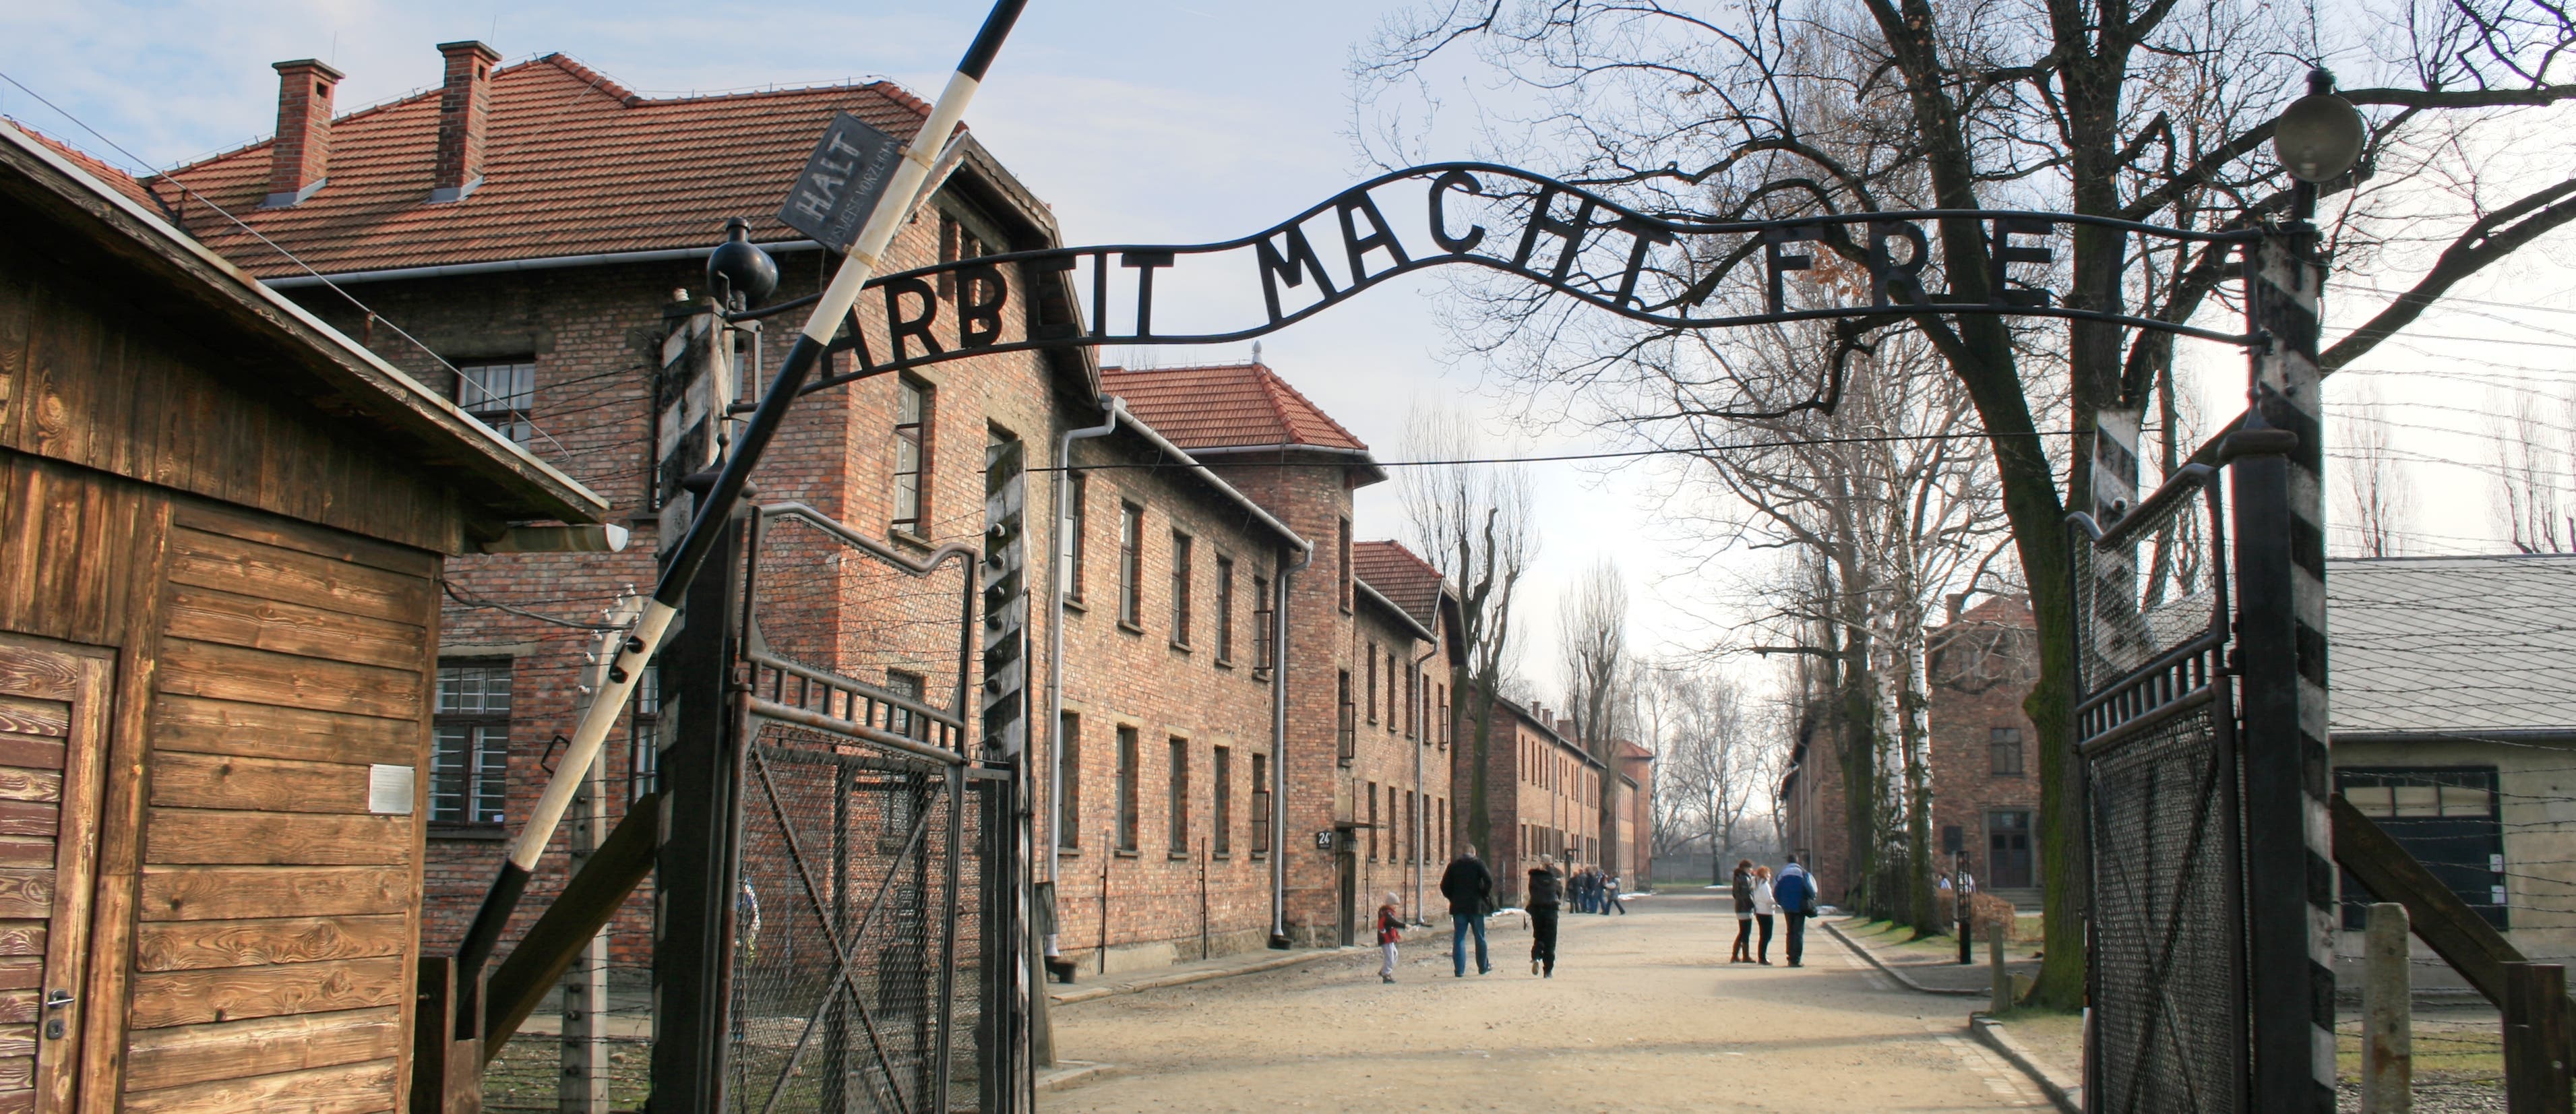 What to see in Poland Auschwitz-Birkenau Memorial & Museum